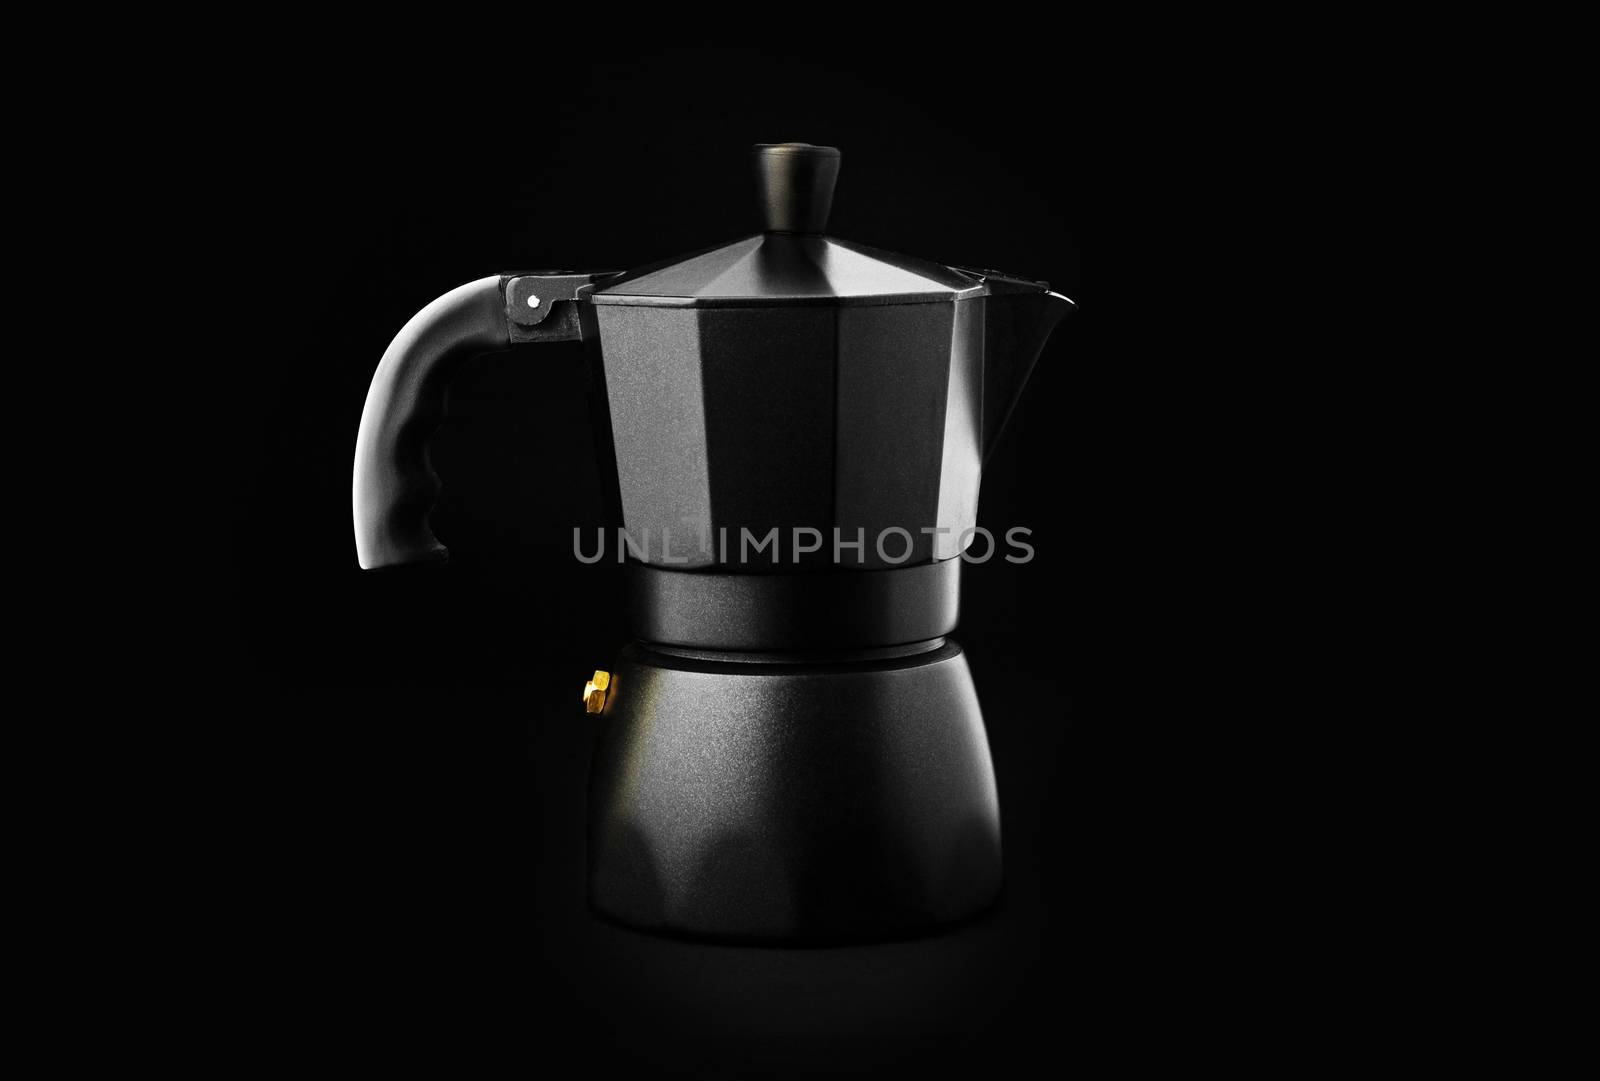 Black Geyser Coffee Maker isolated on black background